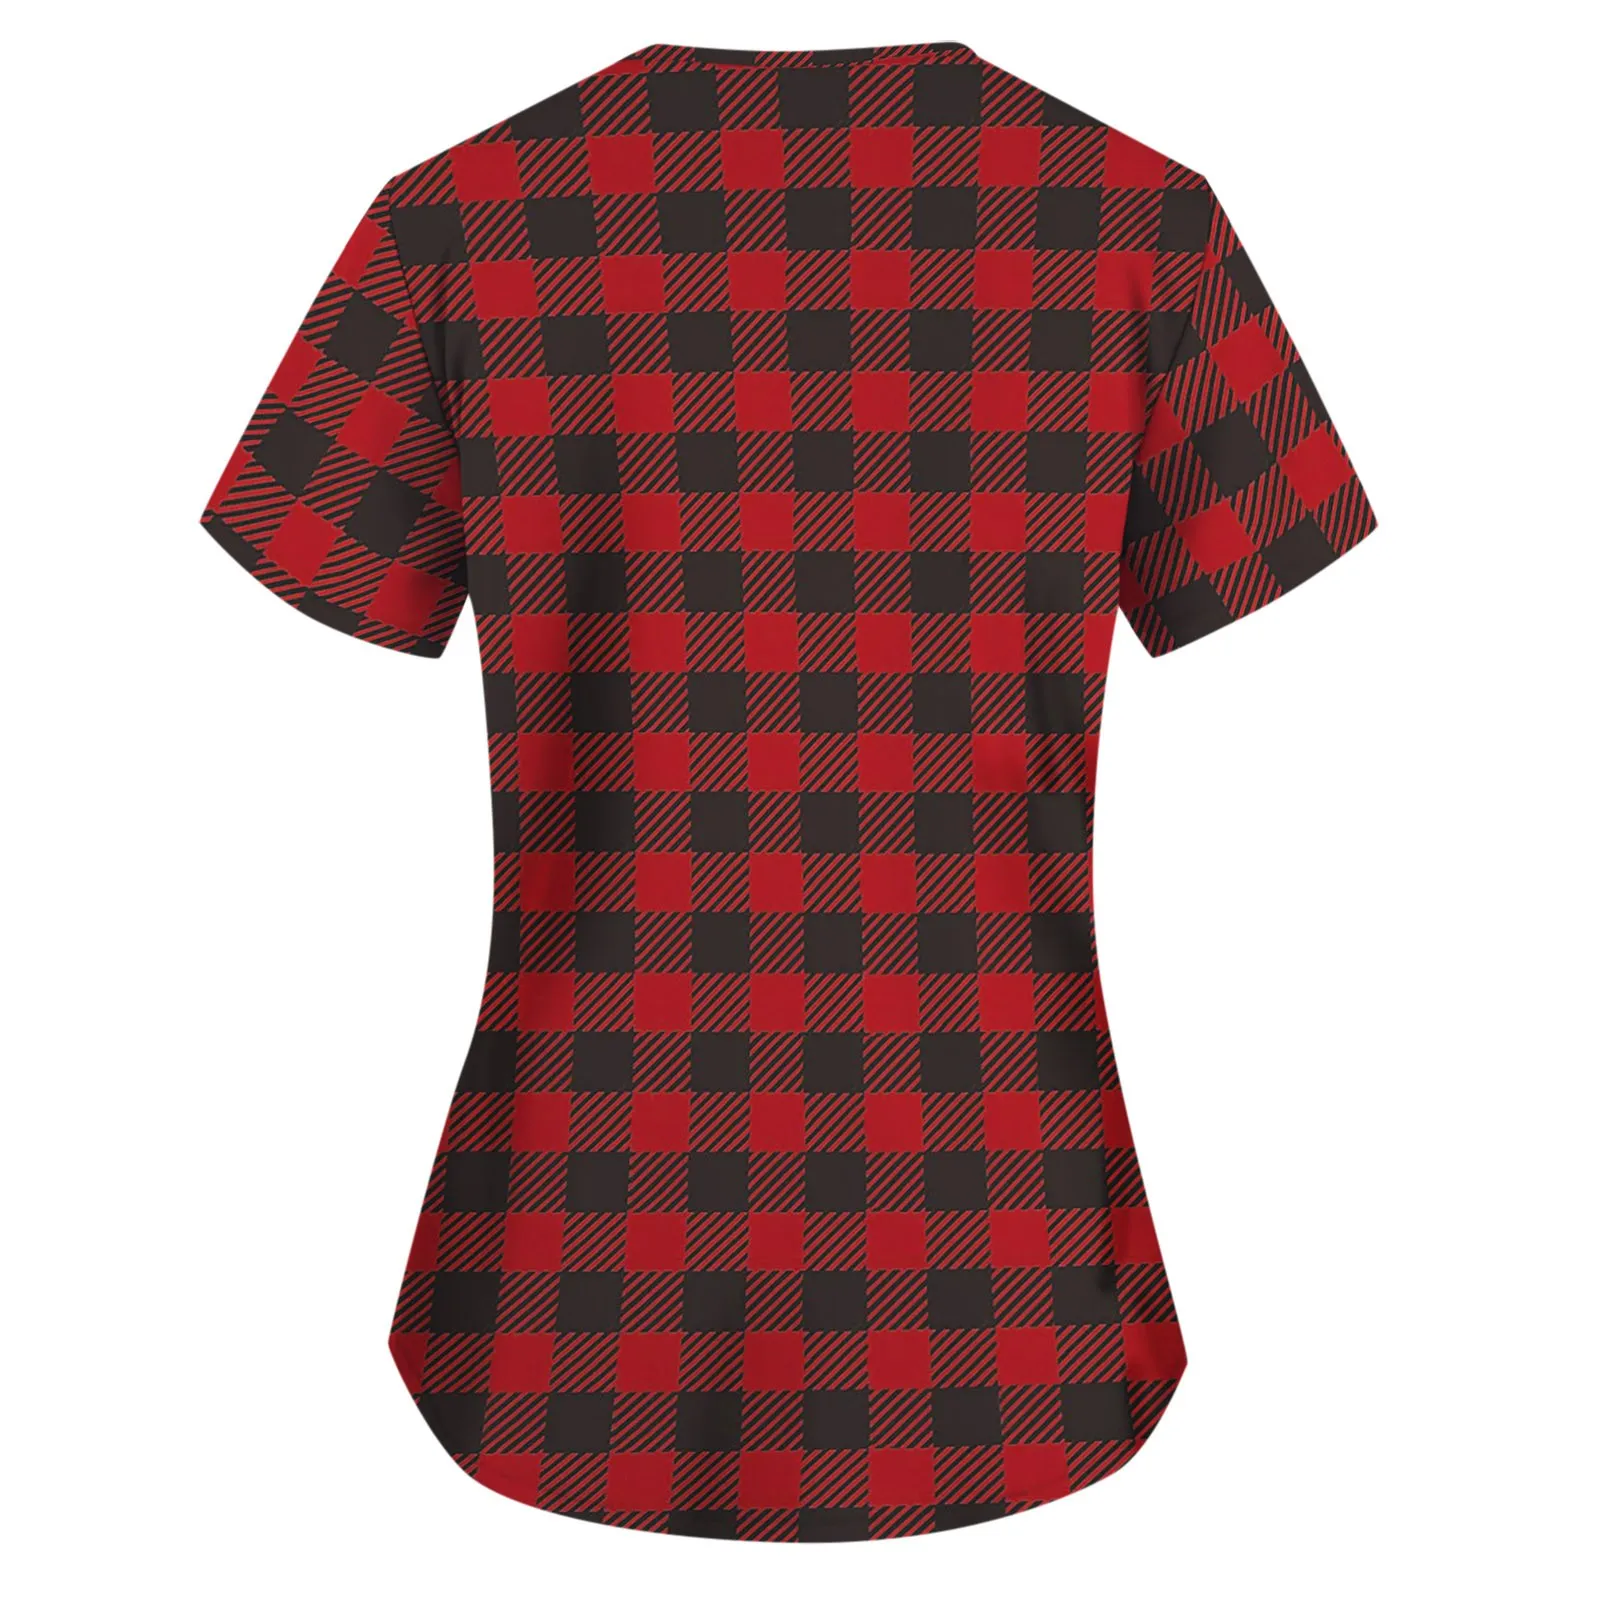 

T-shirt Women's Tops Tee Valentine's Day Plaid Love Pocket V-neck Short Sleeve Loose Top Camiseta Feminina Ropa De Mujer D4